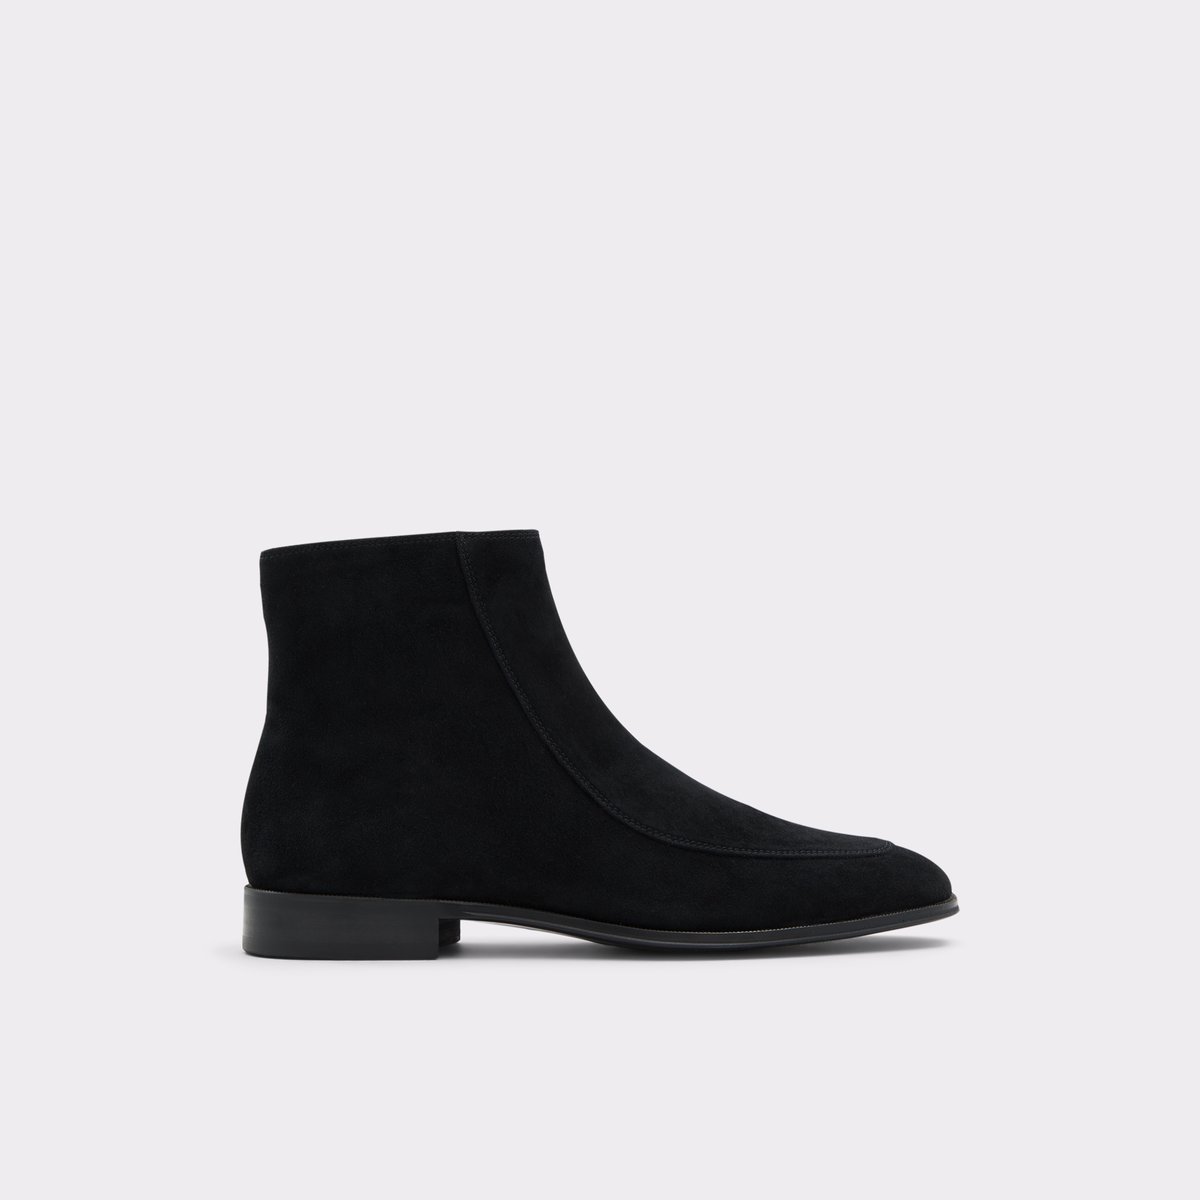 Corbero Black Leather Suede Men's Dress boots | ALDO US